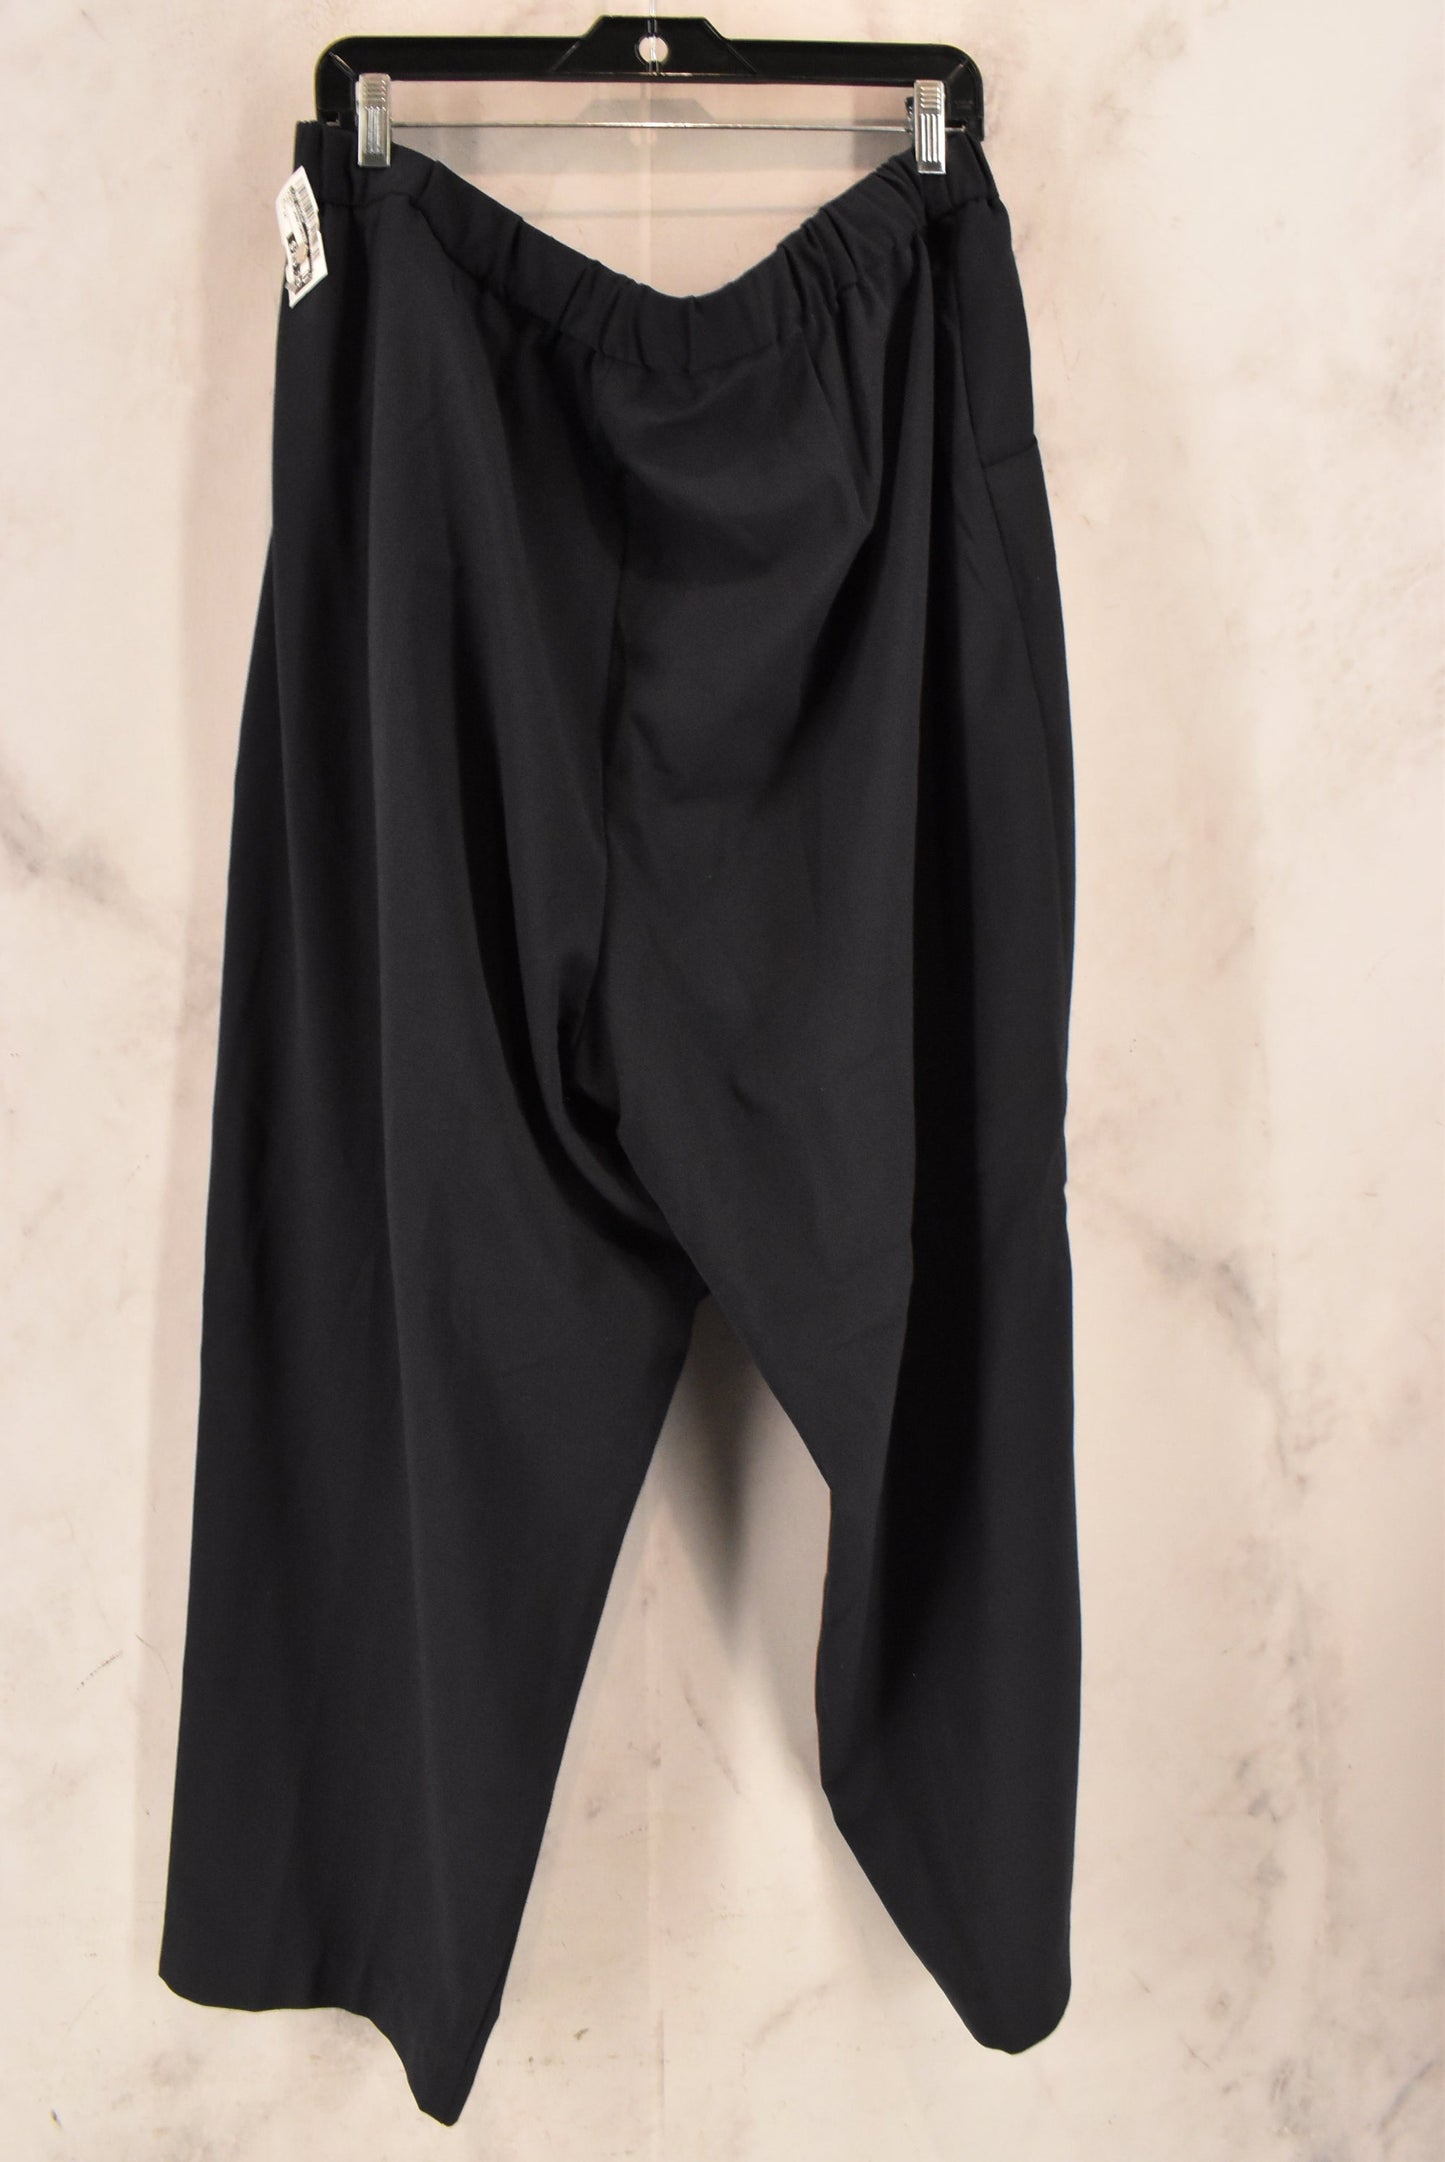 Pants Work/dress By Sag Harbor  Size: 24